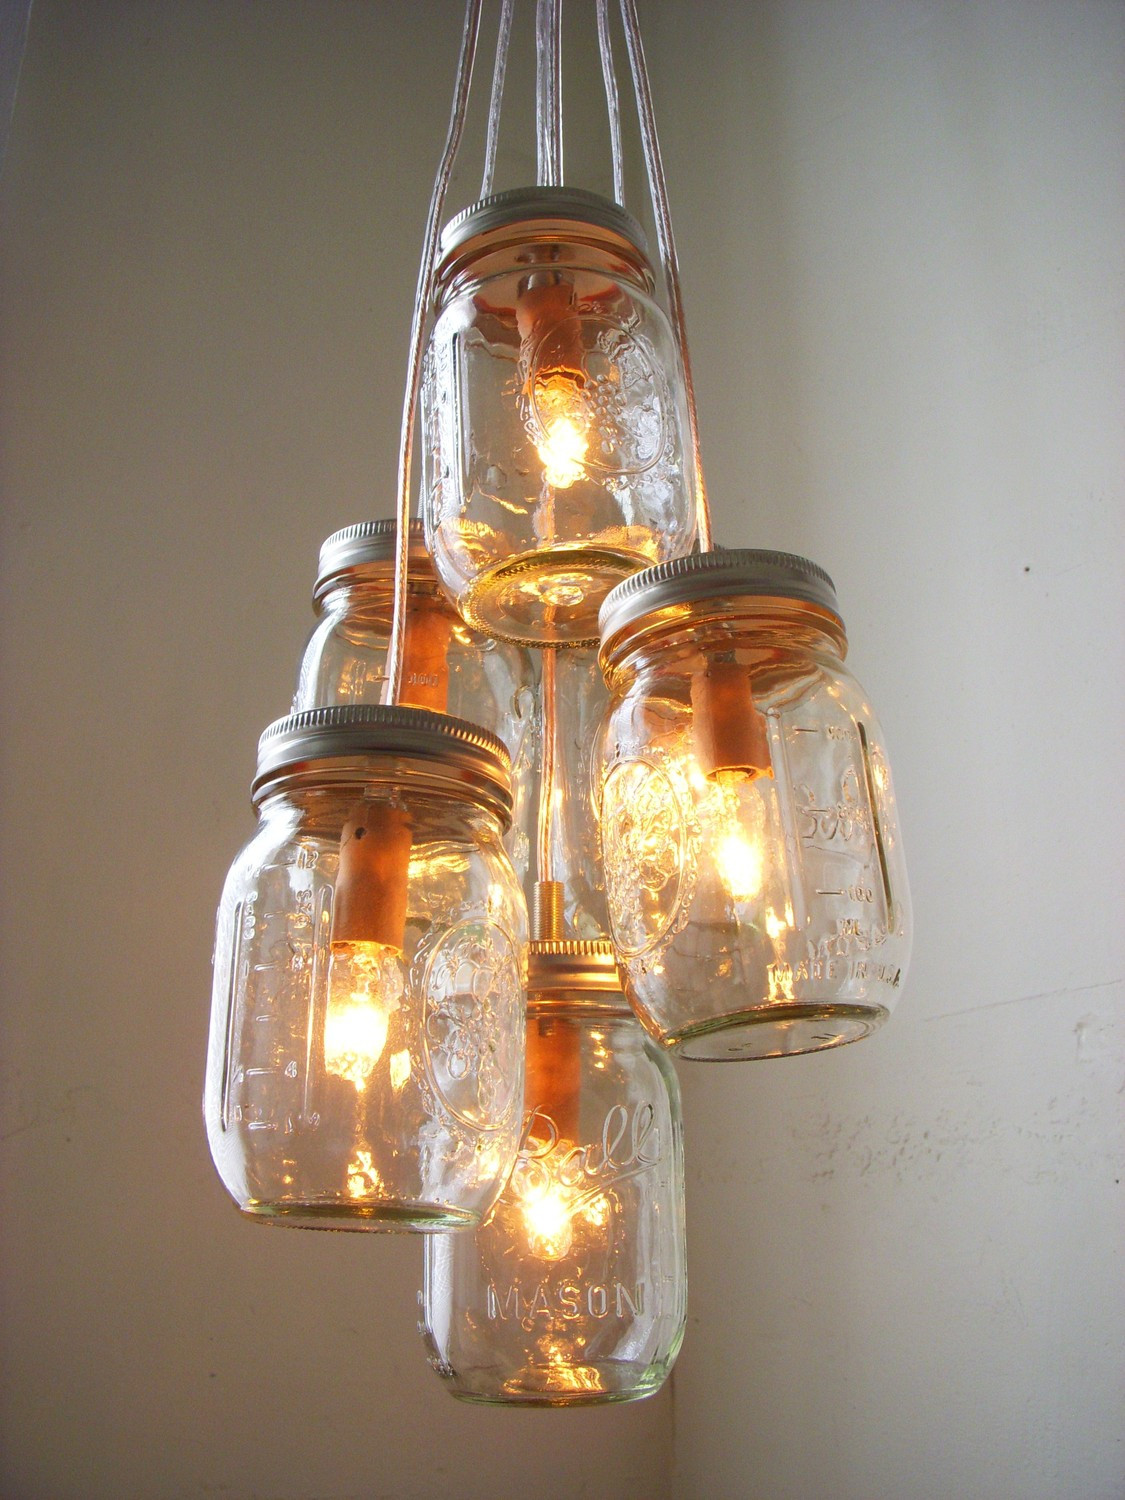 Best ideas about Jar Lights DIY
. Save or Pin Mason Jar Chandelier Now.